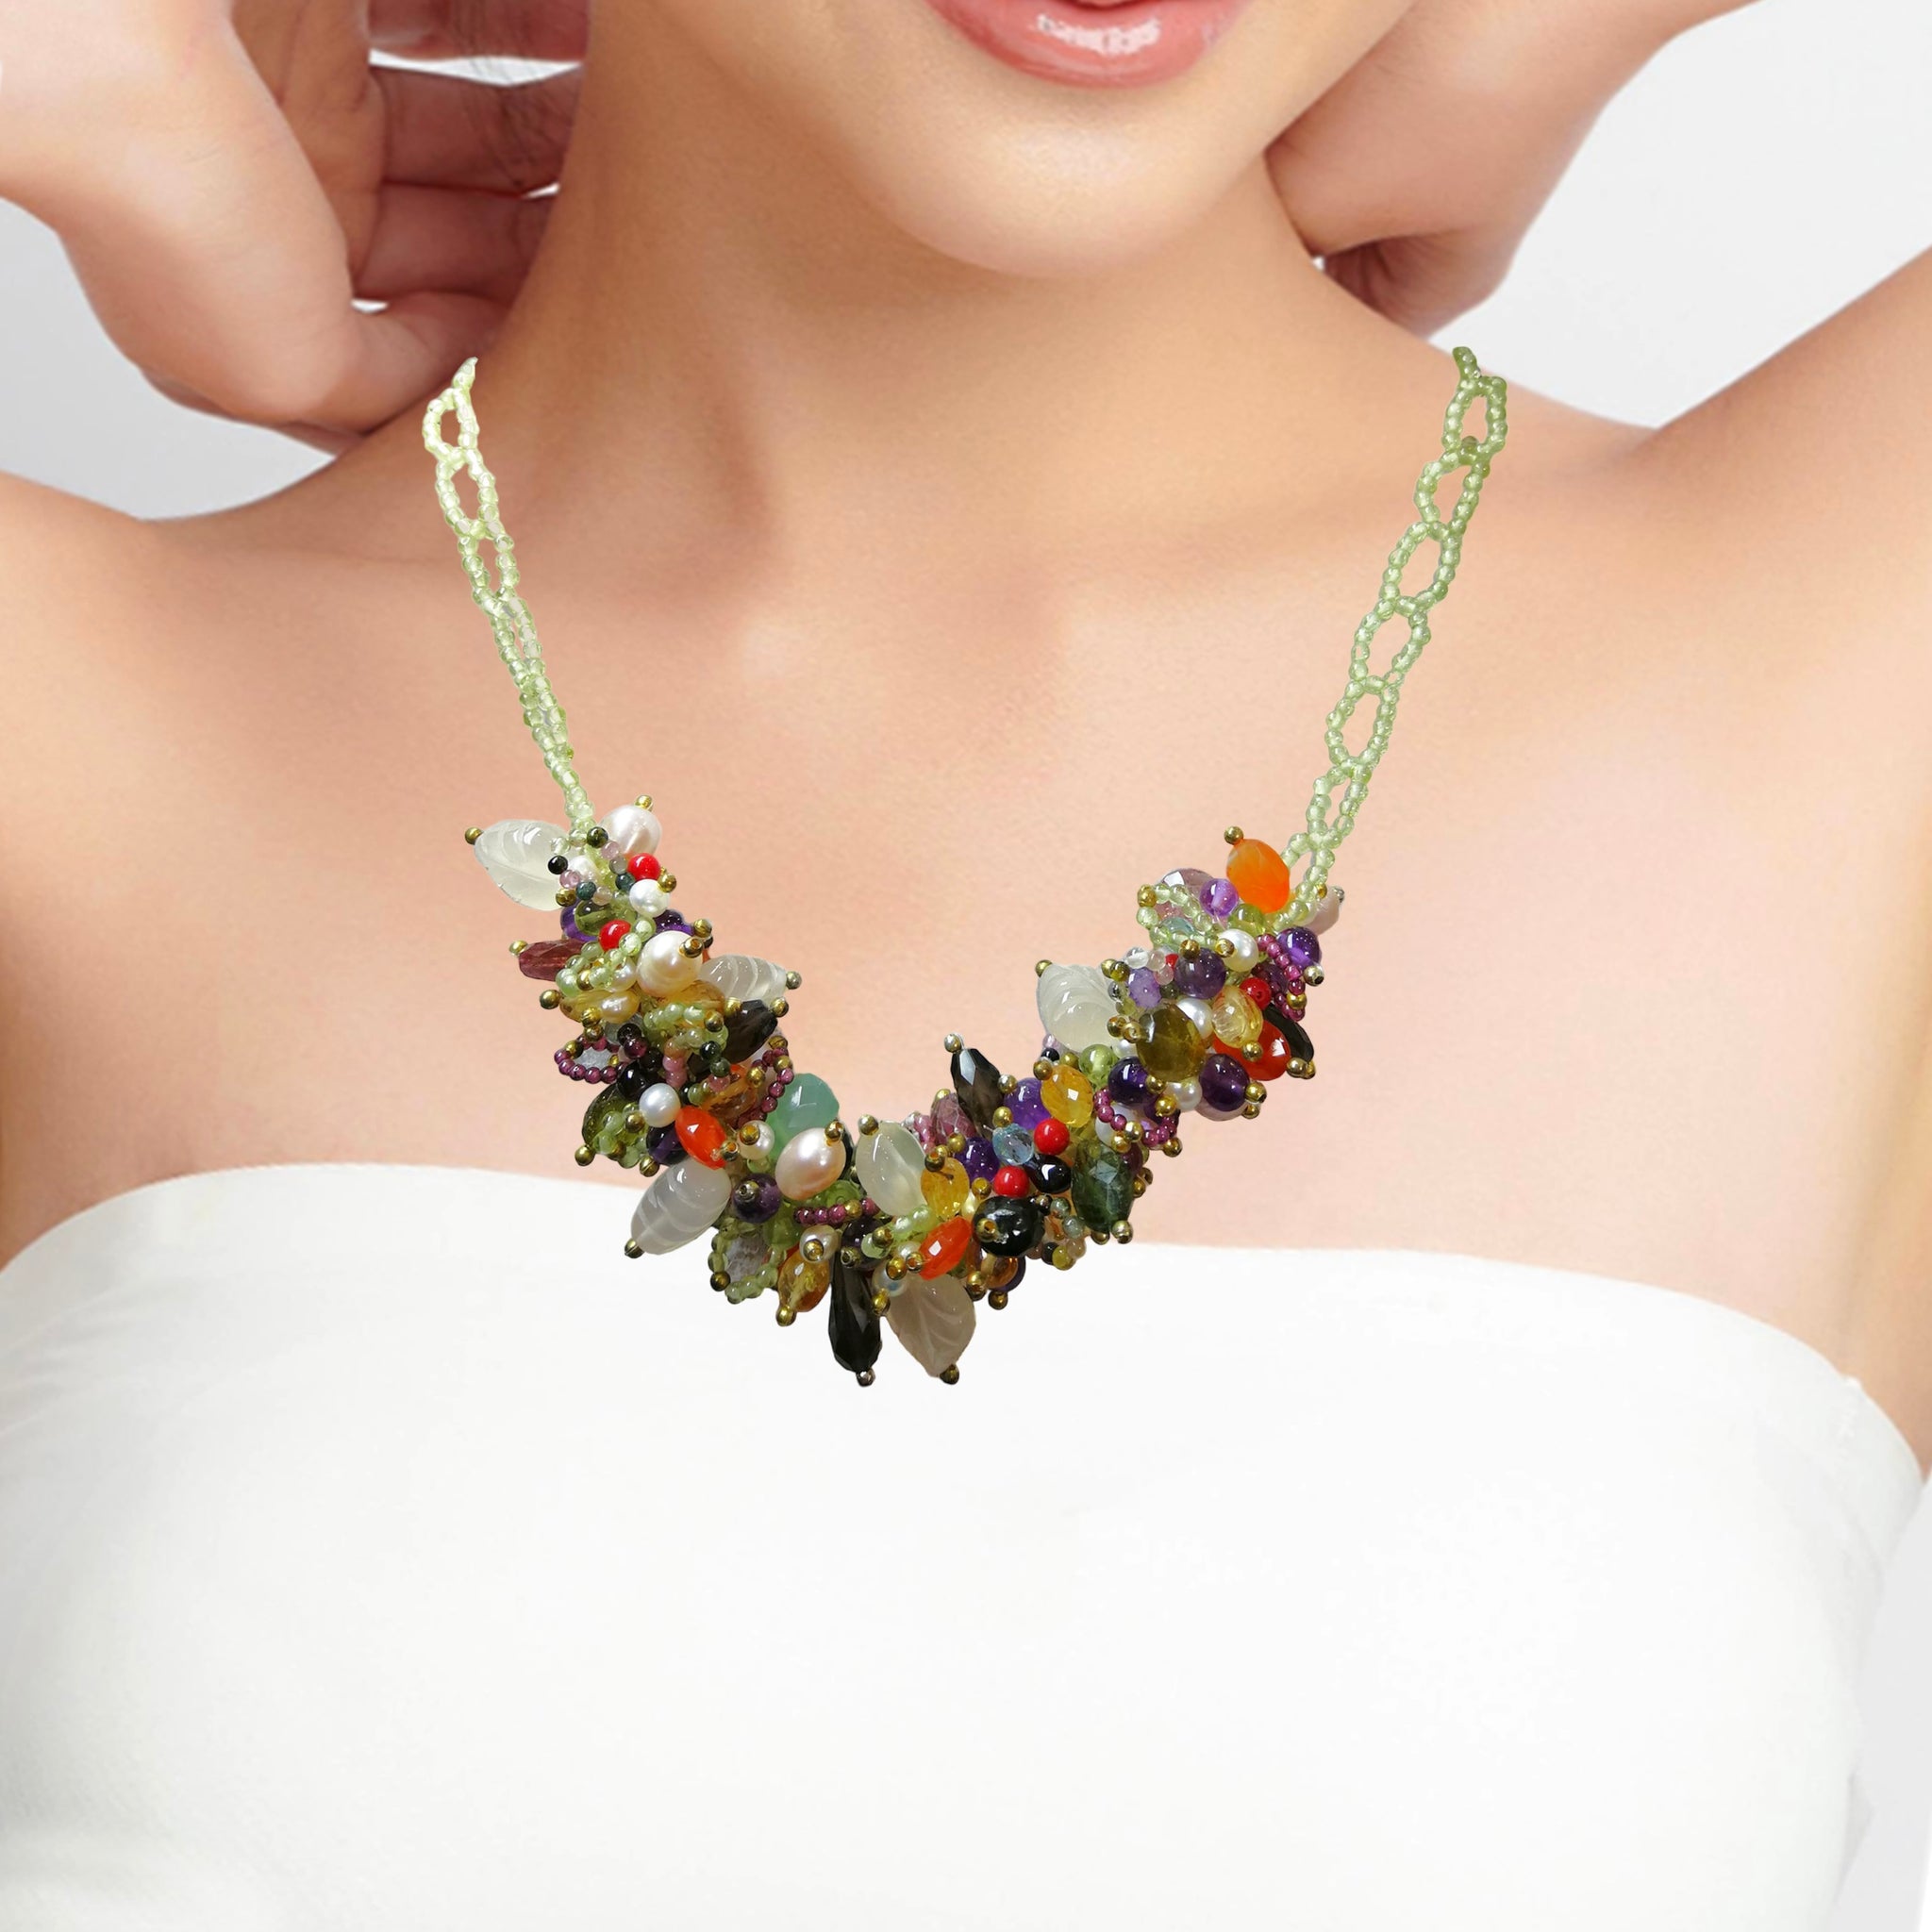 Natural Handmade Necklace 16"-18" Multi Semiprecious Stones - Peridot, Pearls, Garnet, Carnelian Gemstone Beads Jewellery